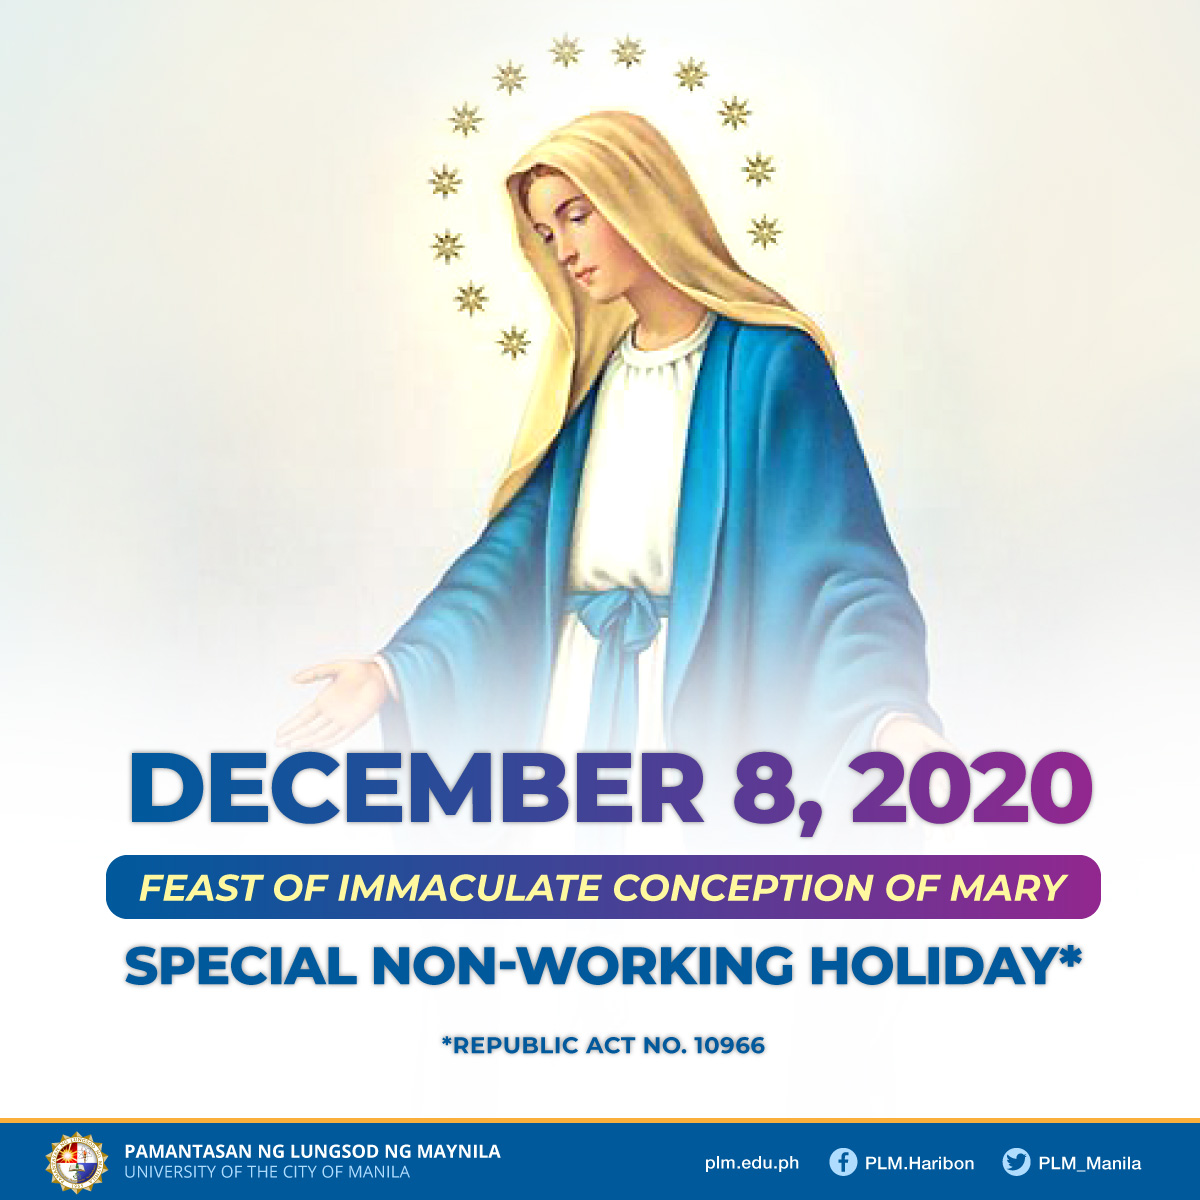 Classes, work suspended on Dec. 8, 2020